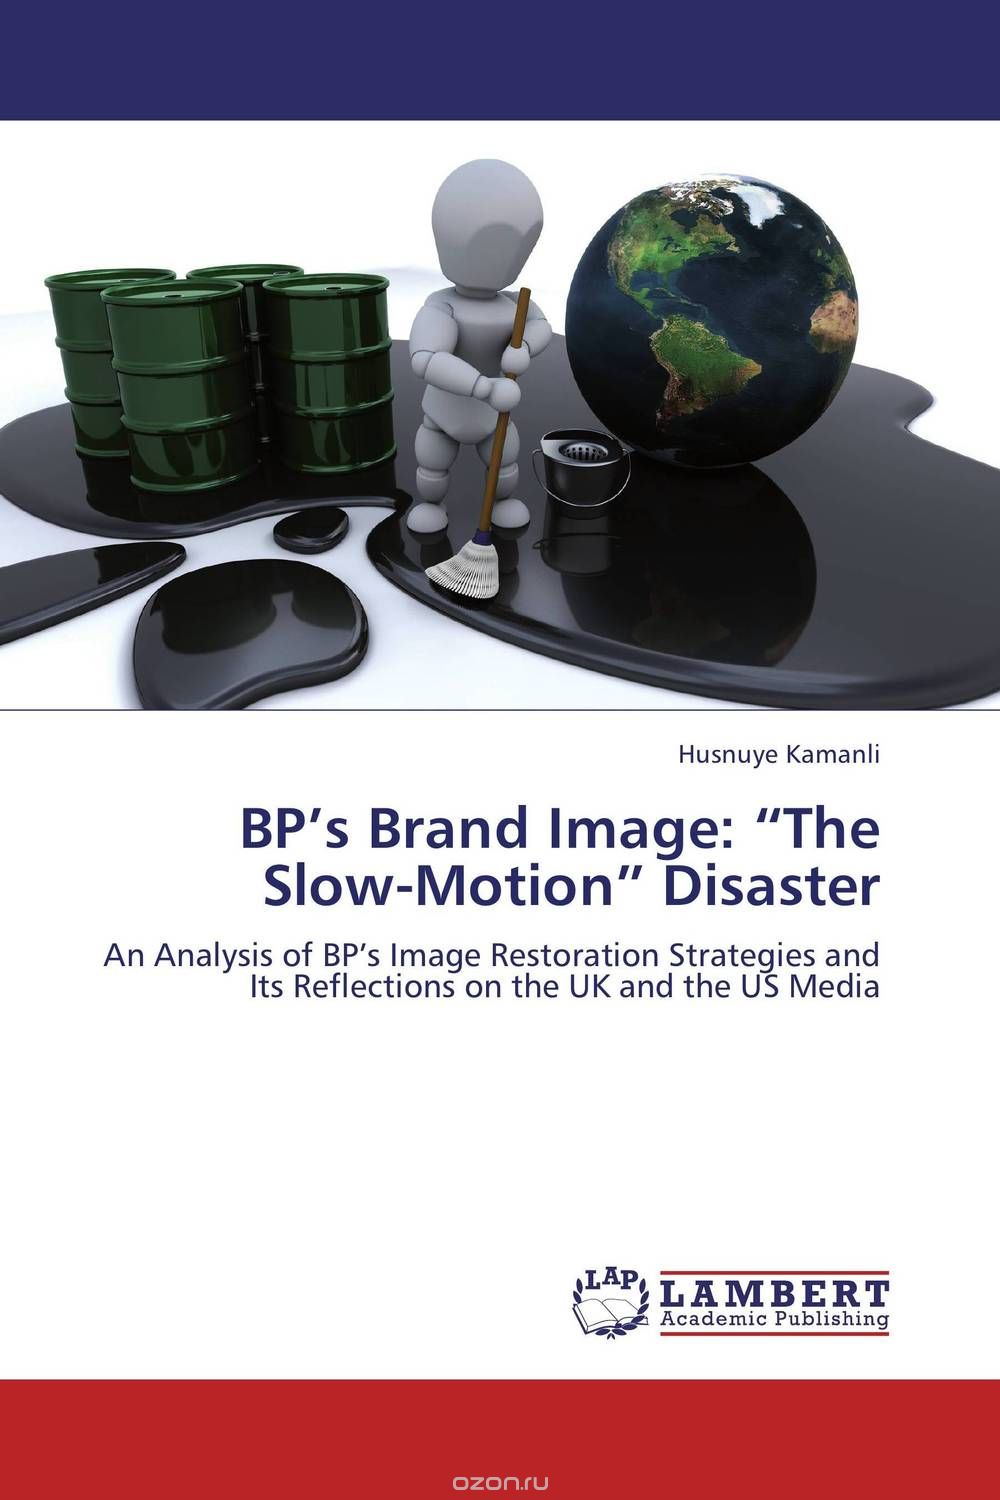 Скачать книгу "BP’s Brand Image: “The Slow-Motion” Disaster"